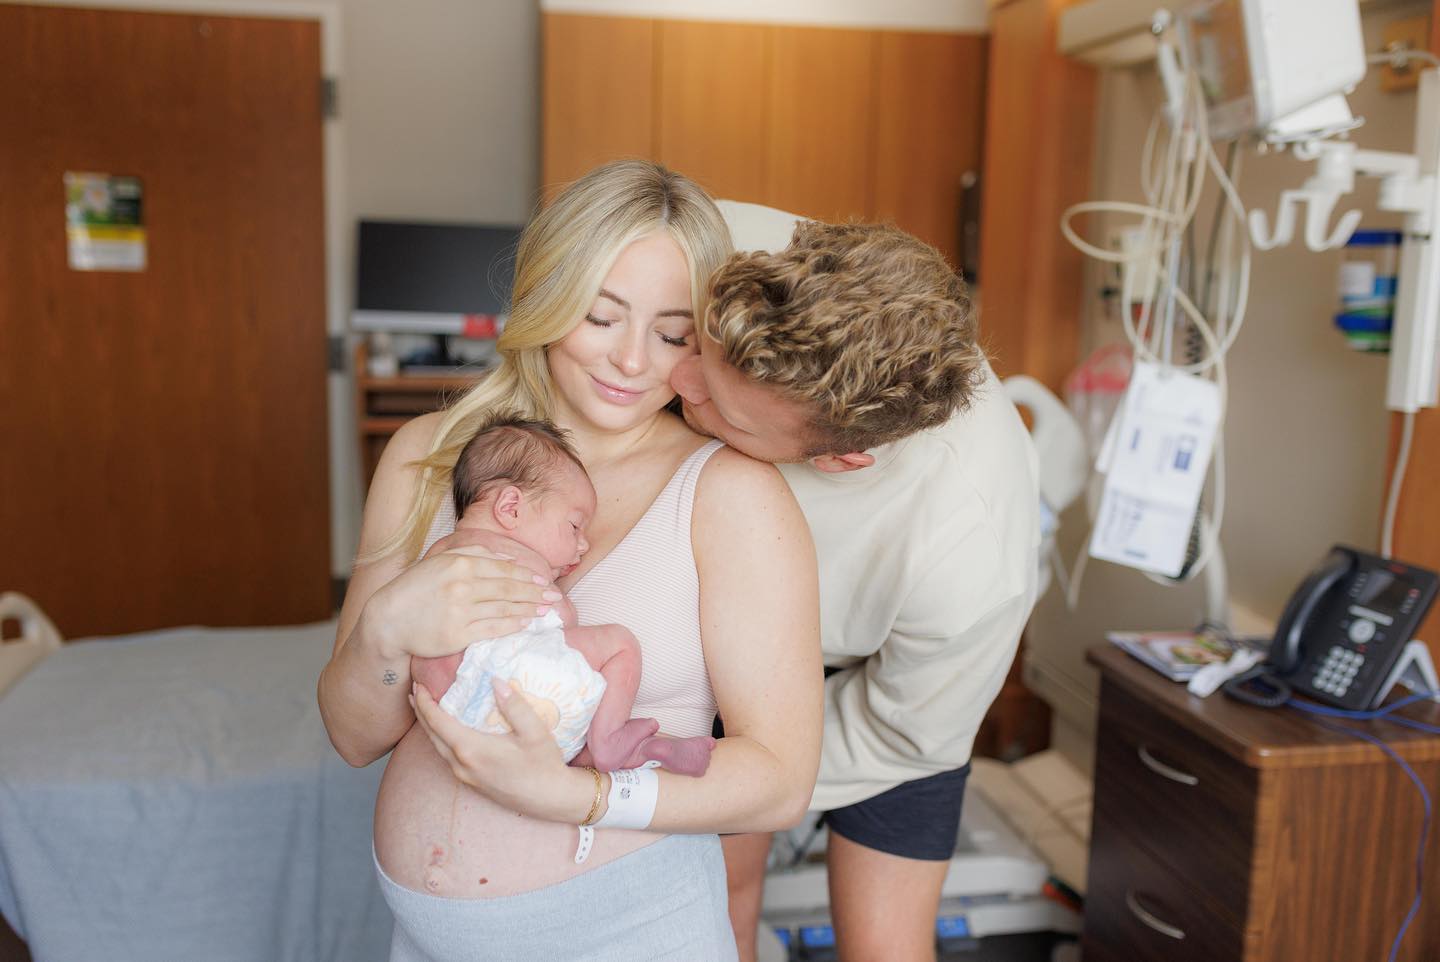 MyKayla Skinner with her baby daddy, Jonas Harmer, as she holds her baby girl